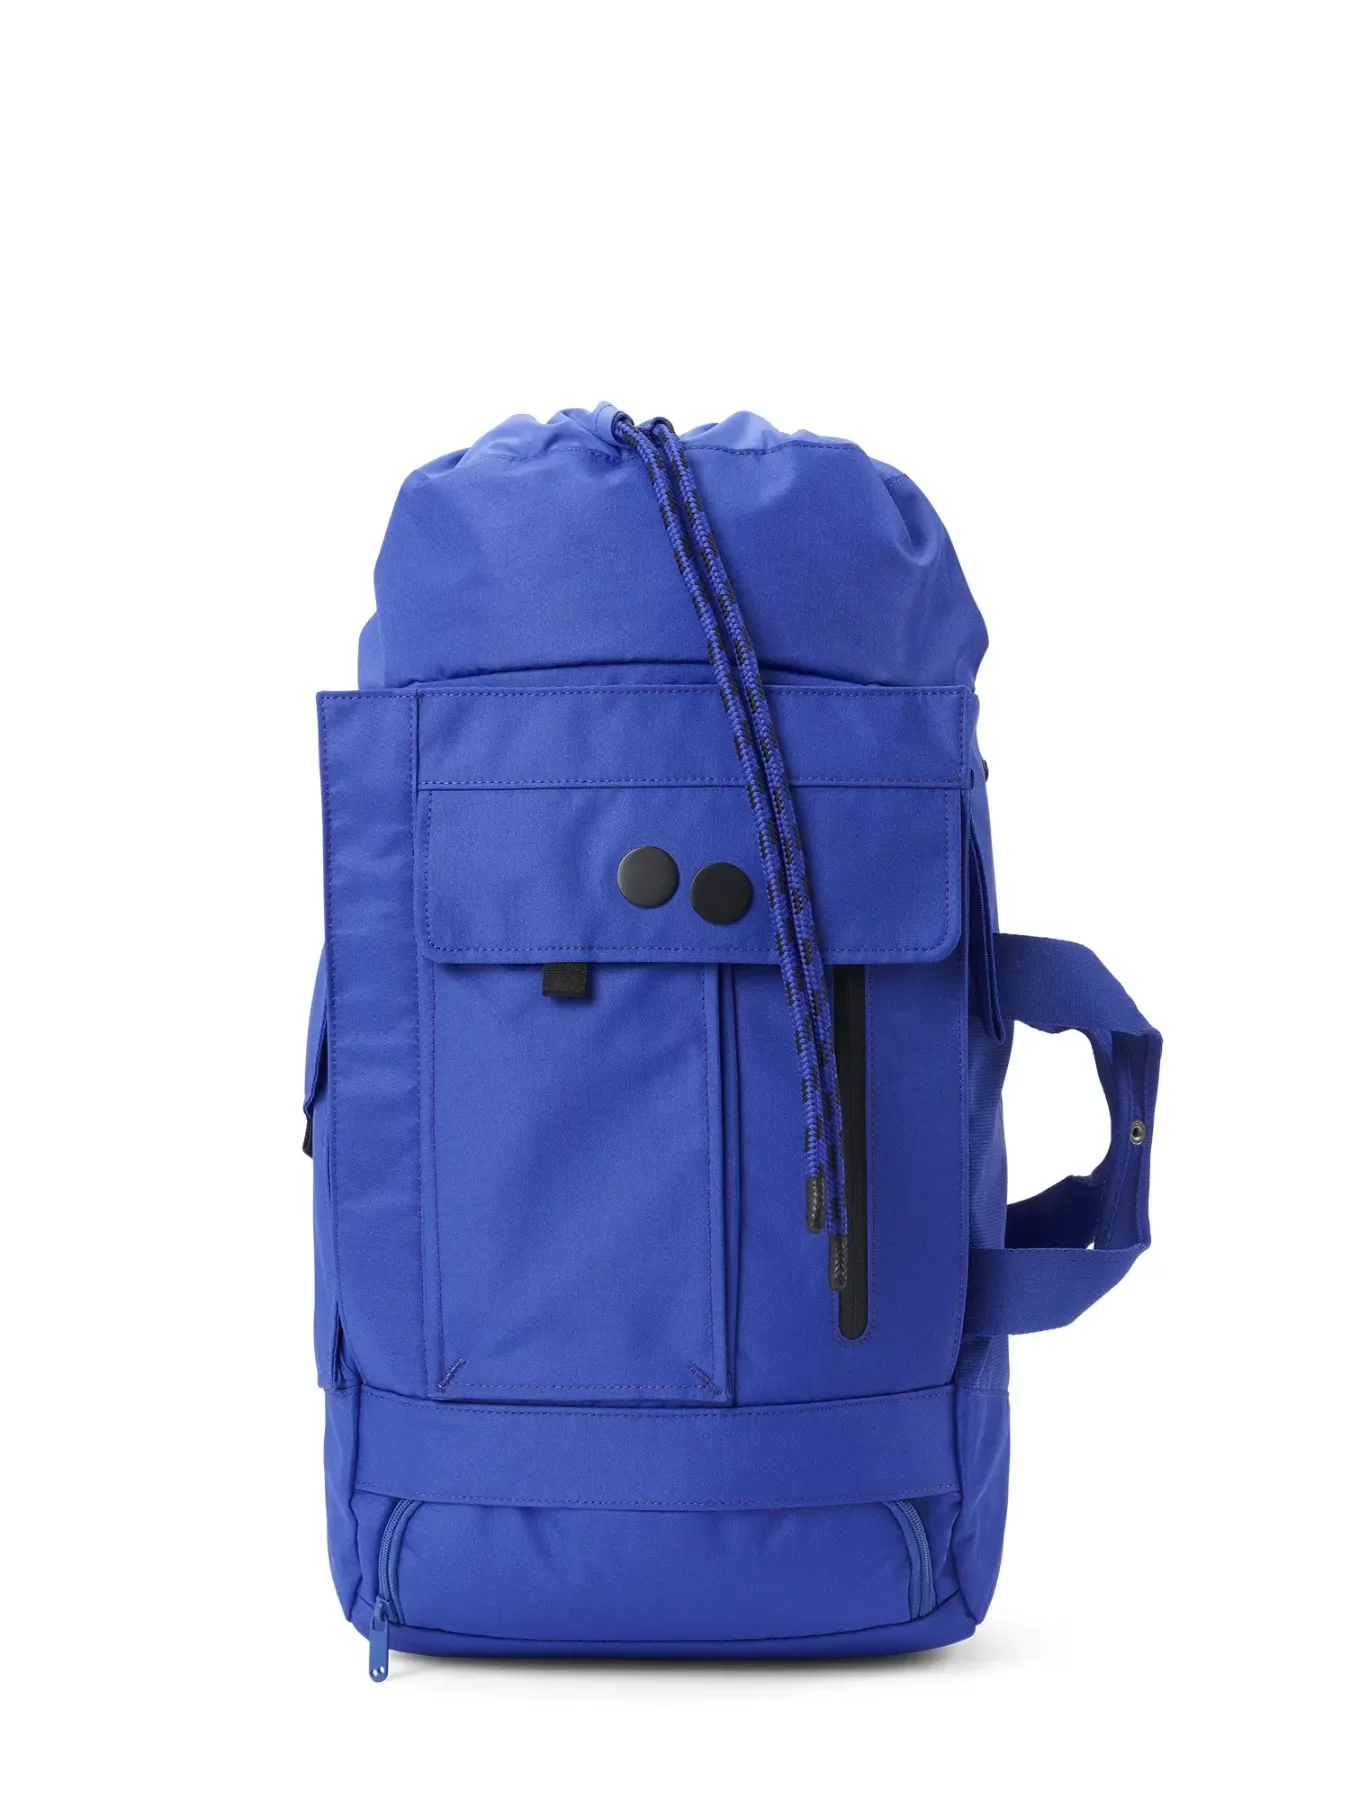 pinqponq Backpack BLOK medium Construct - Poppy Blue